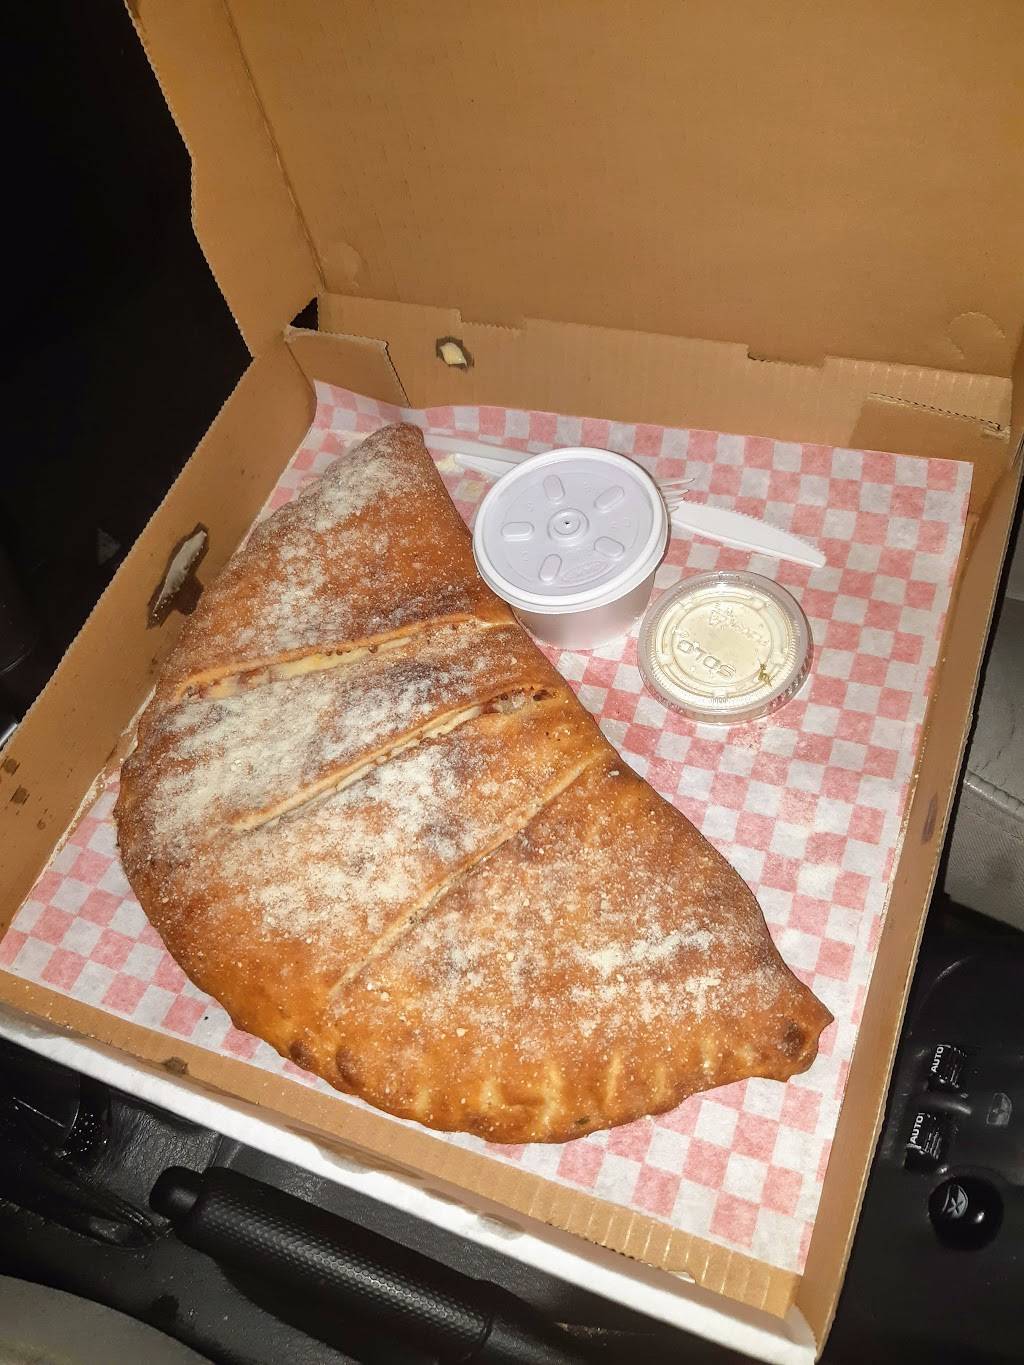 Yum Yum Pizza | 3200 Sandwich St, Windsor, ON N9C 1A8, Canada | Phone: (519) 253-5444